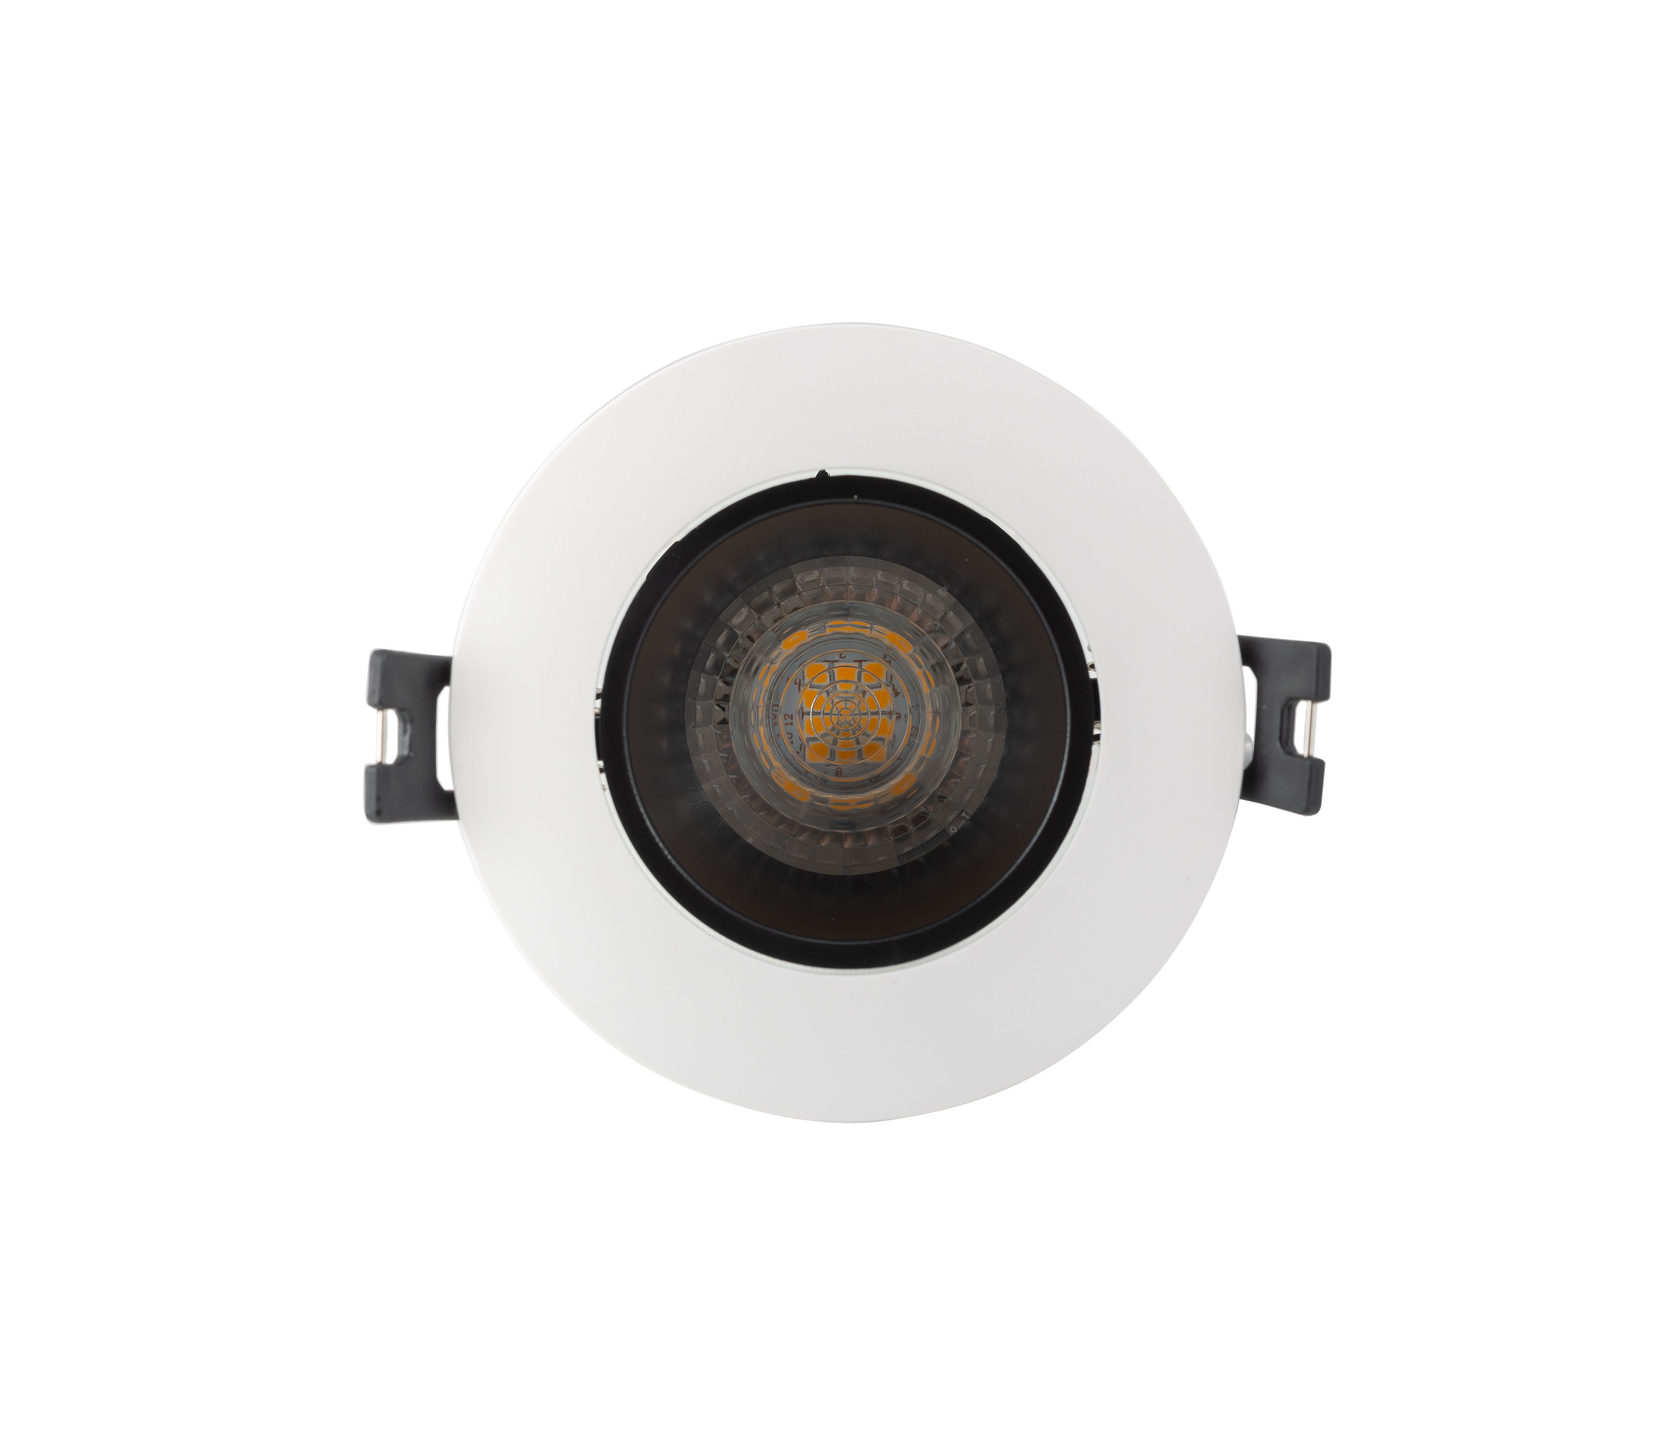 DK3020-WB Встраиваемый светильник, IP 20, 10 Вт, GU5.3, LED, белый/черный, пластик DK3020-WB